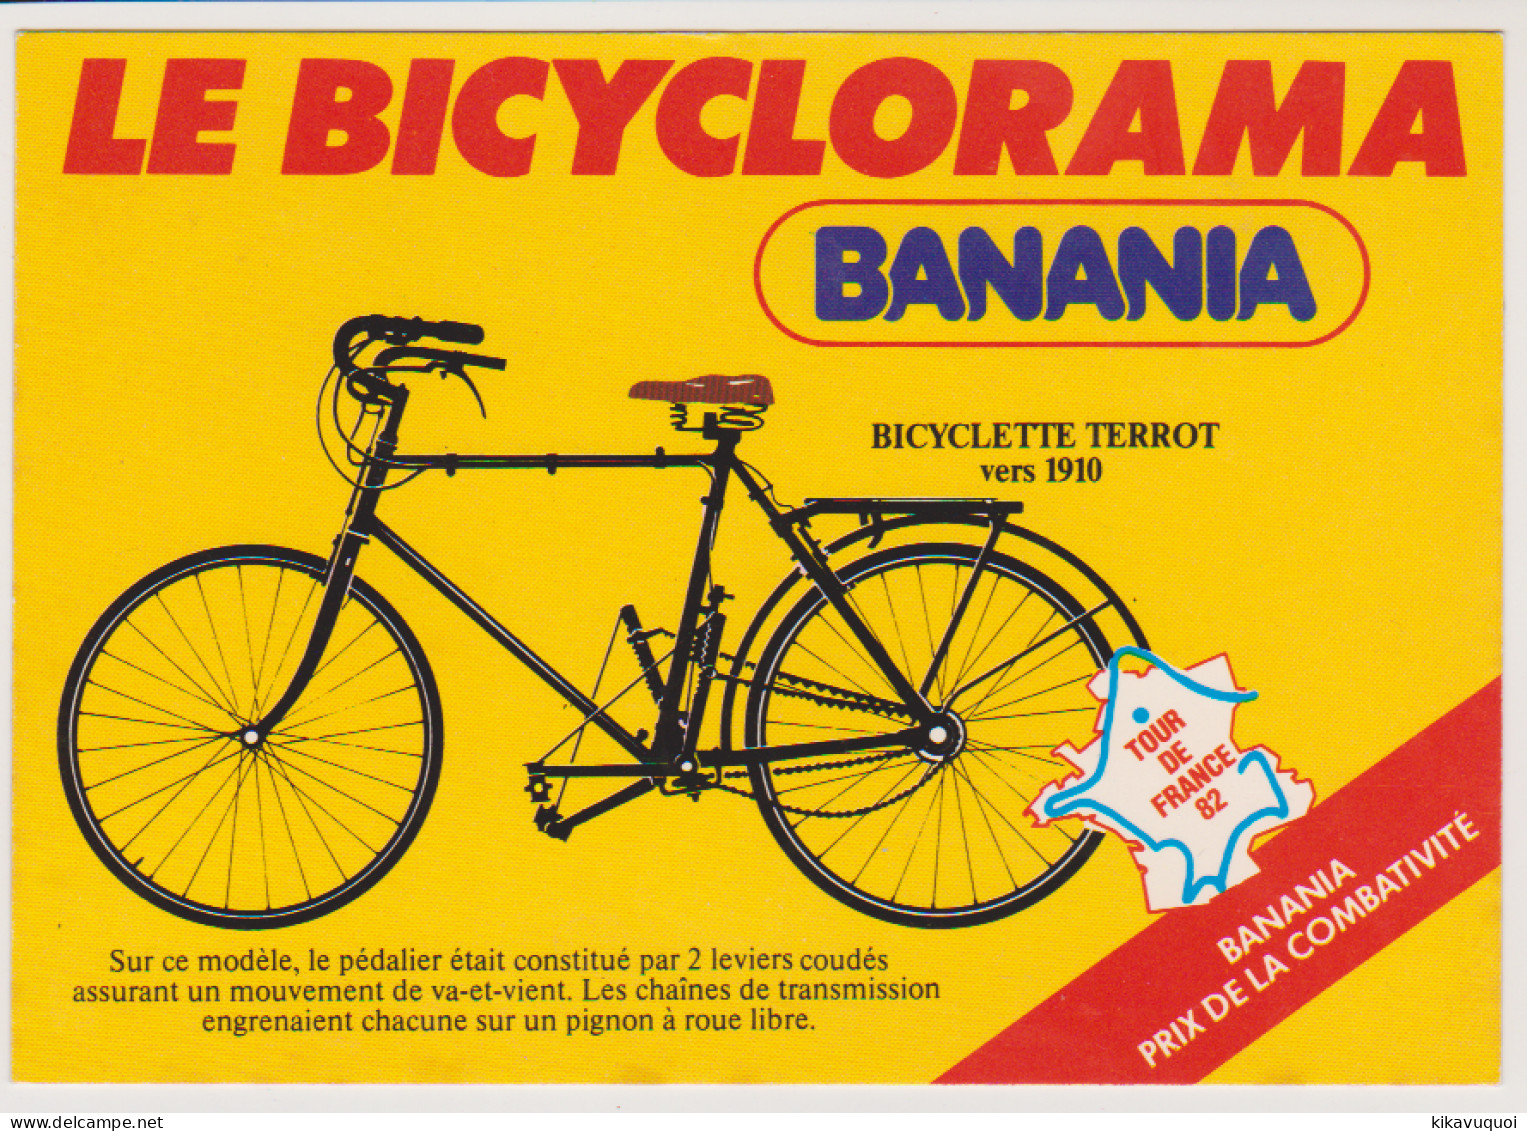 BANANIA -  69eme TOUR DE FRANCE - LE BICYCLORAMA - VELO - CYCLE - CARTE POSTALE ANCIENNE - Motorräder